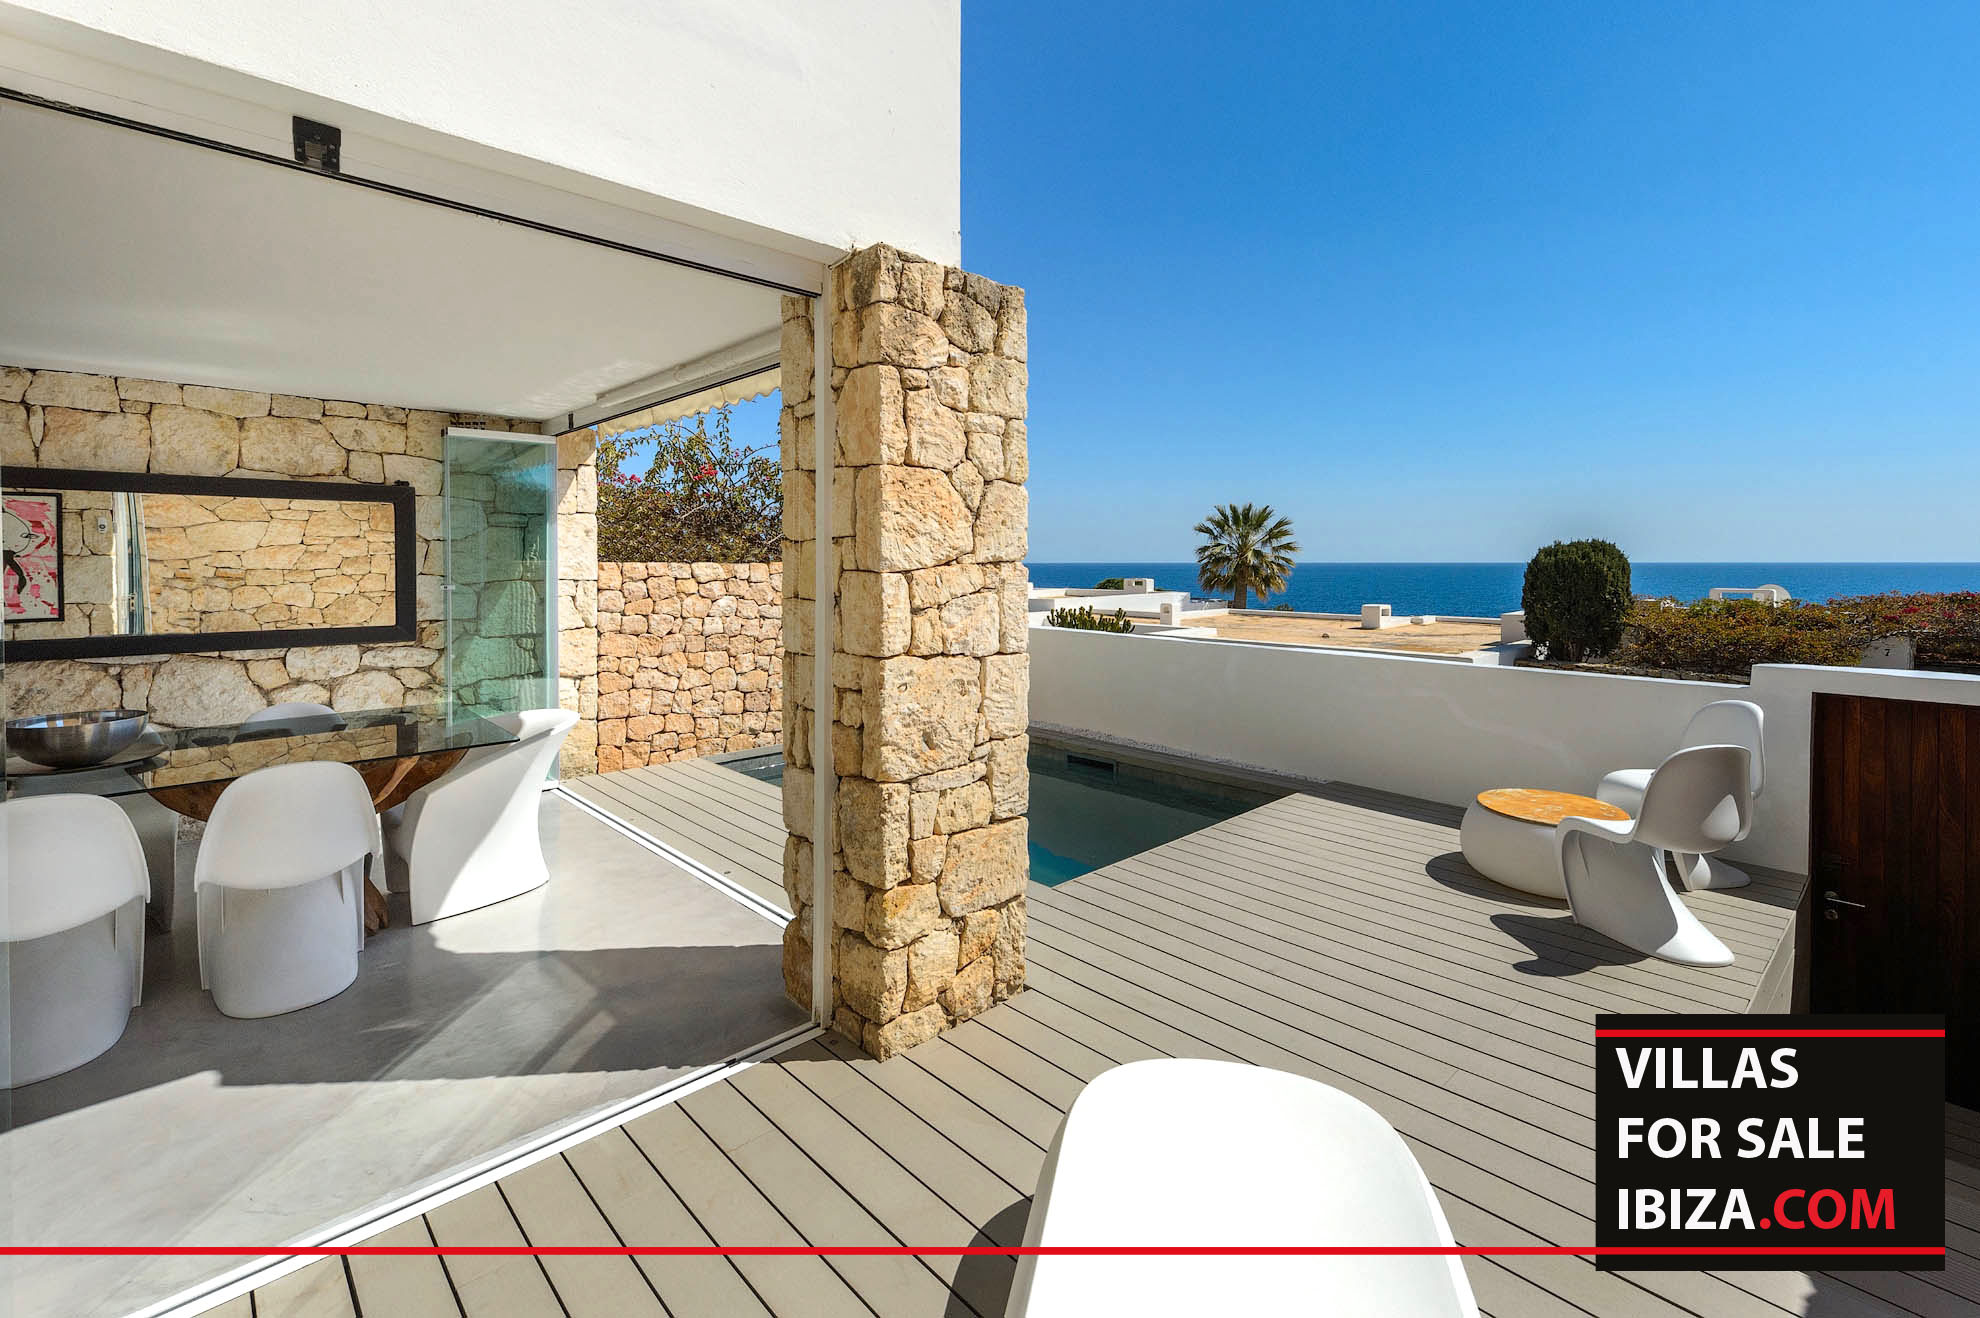 Villa's for sale Ibiza - Roca llisa Adosada - Ibiza real estate